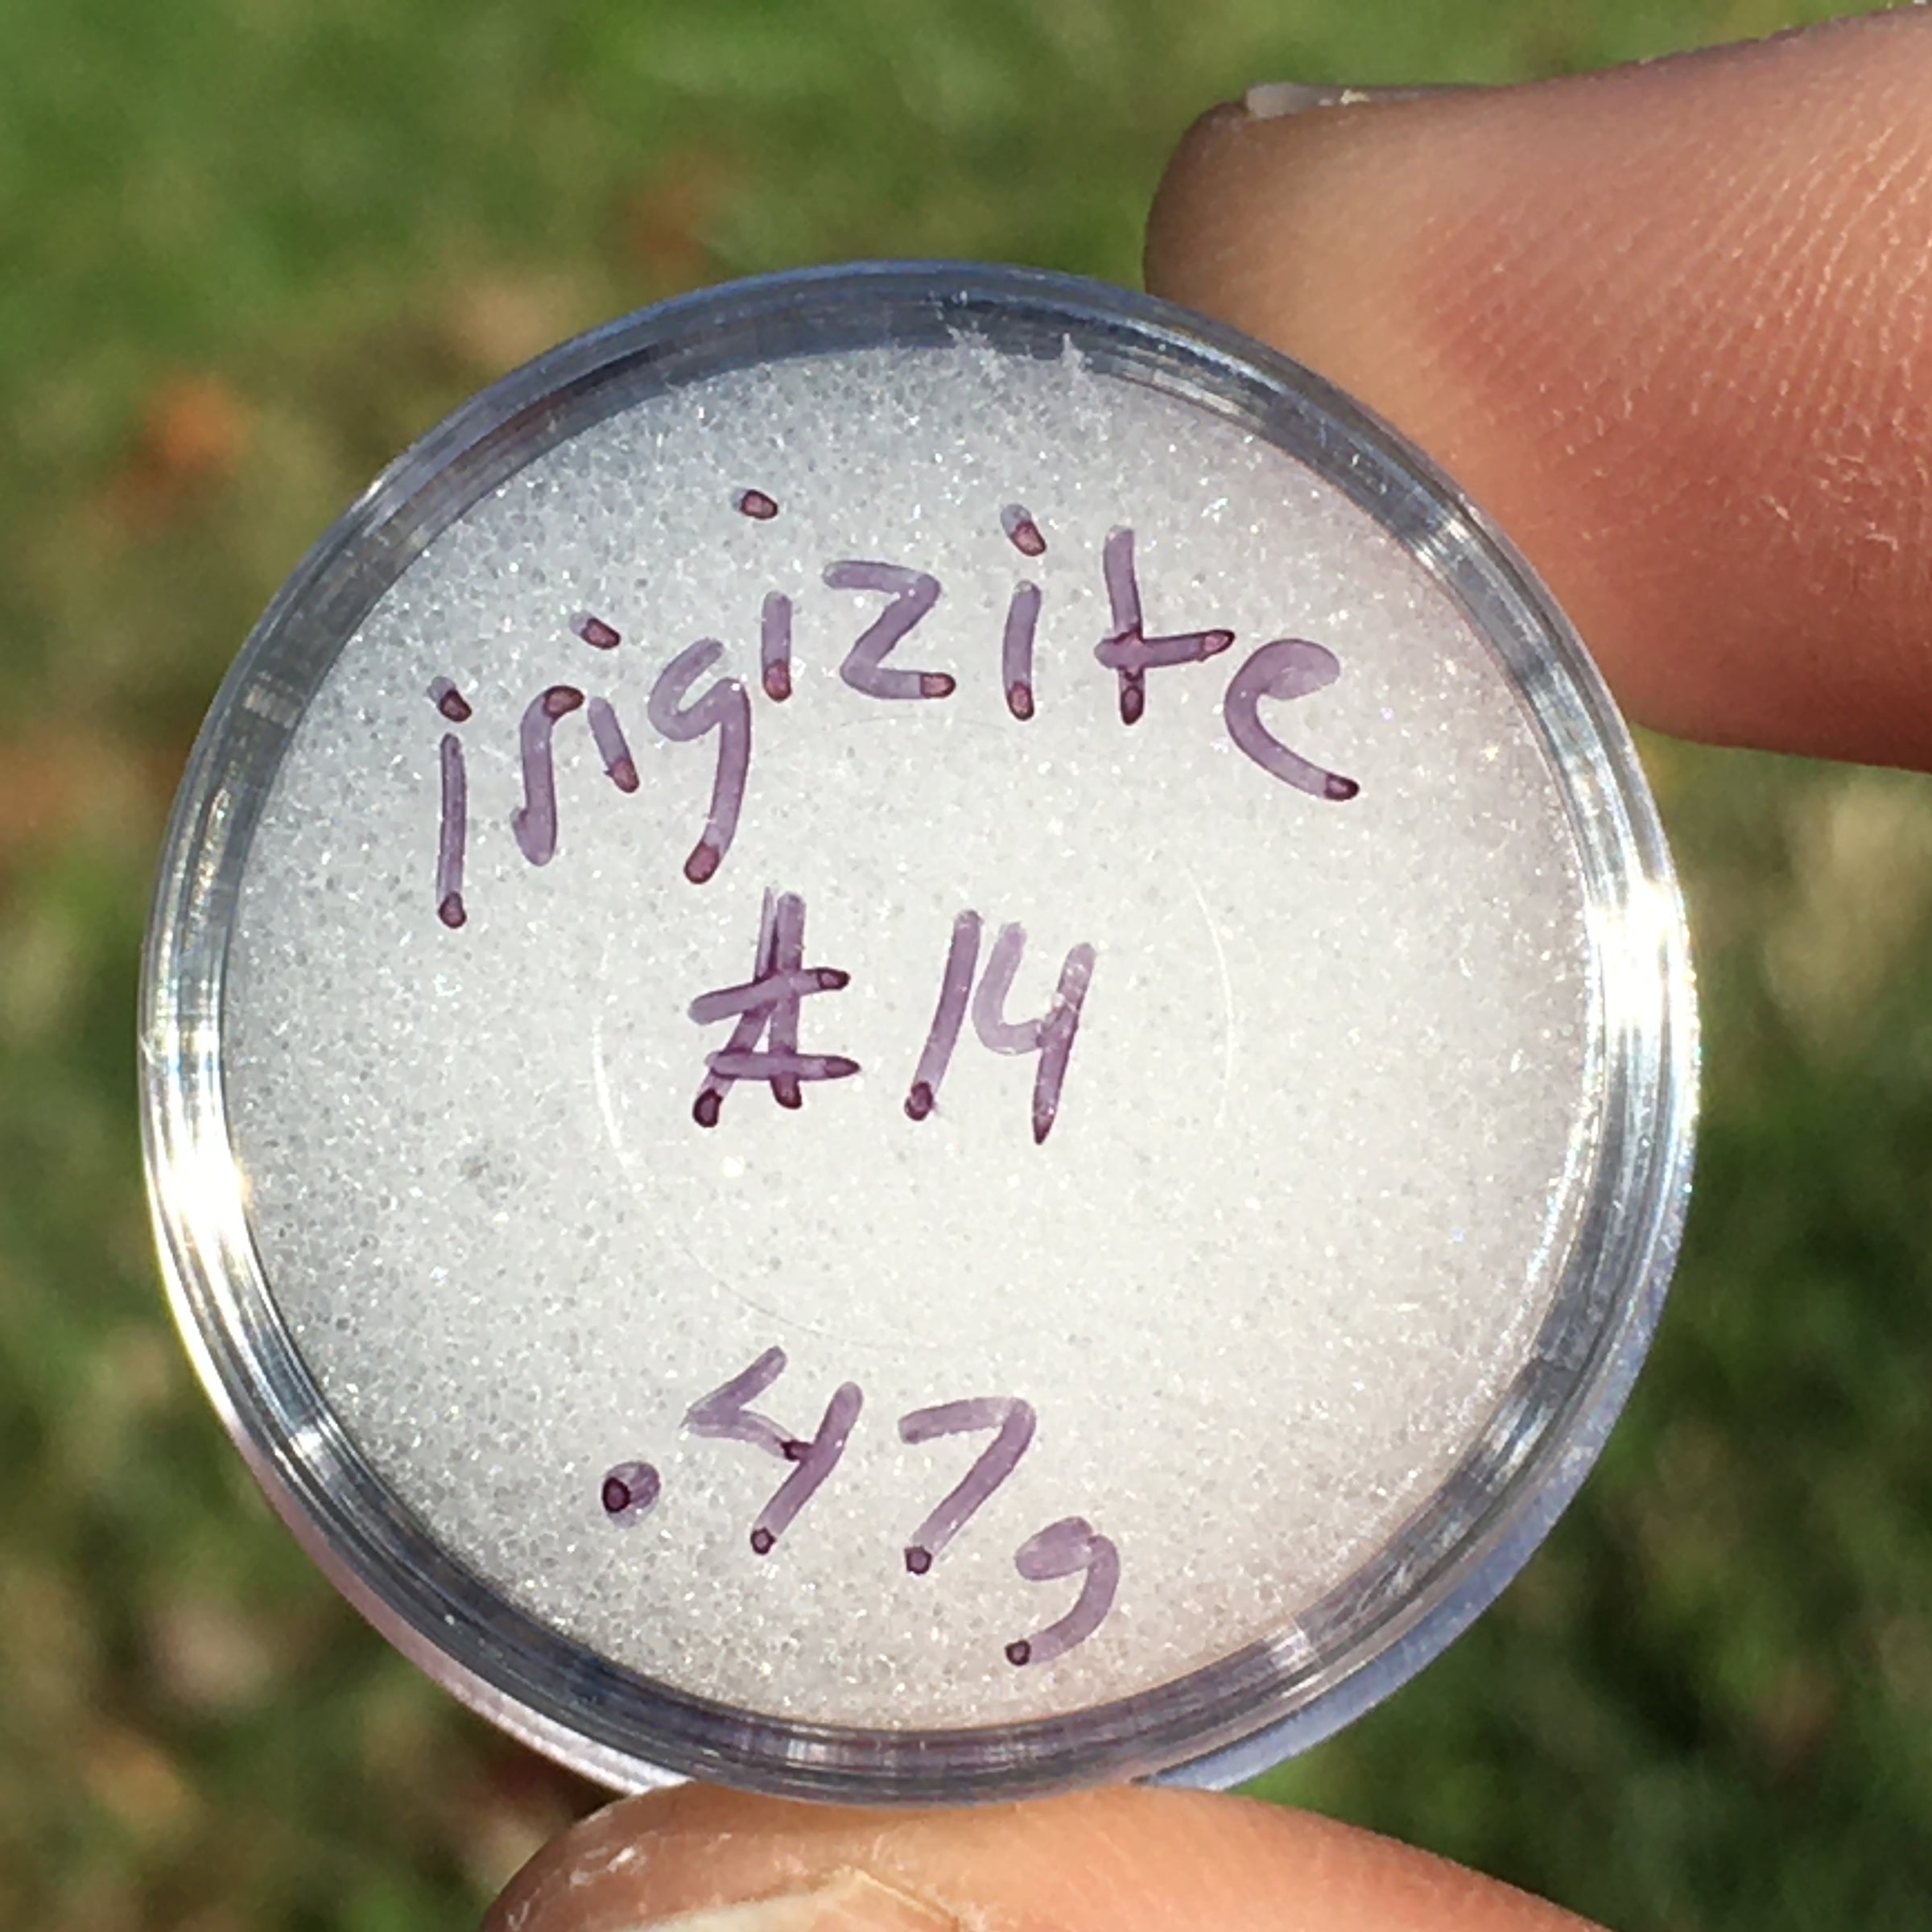 RARE Irgizite Tektite-Moldavite Life